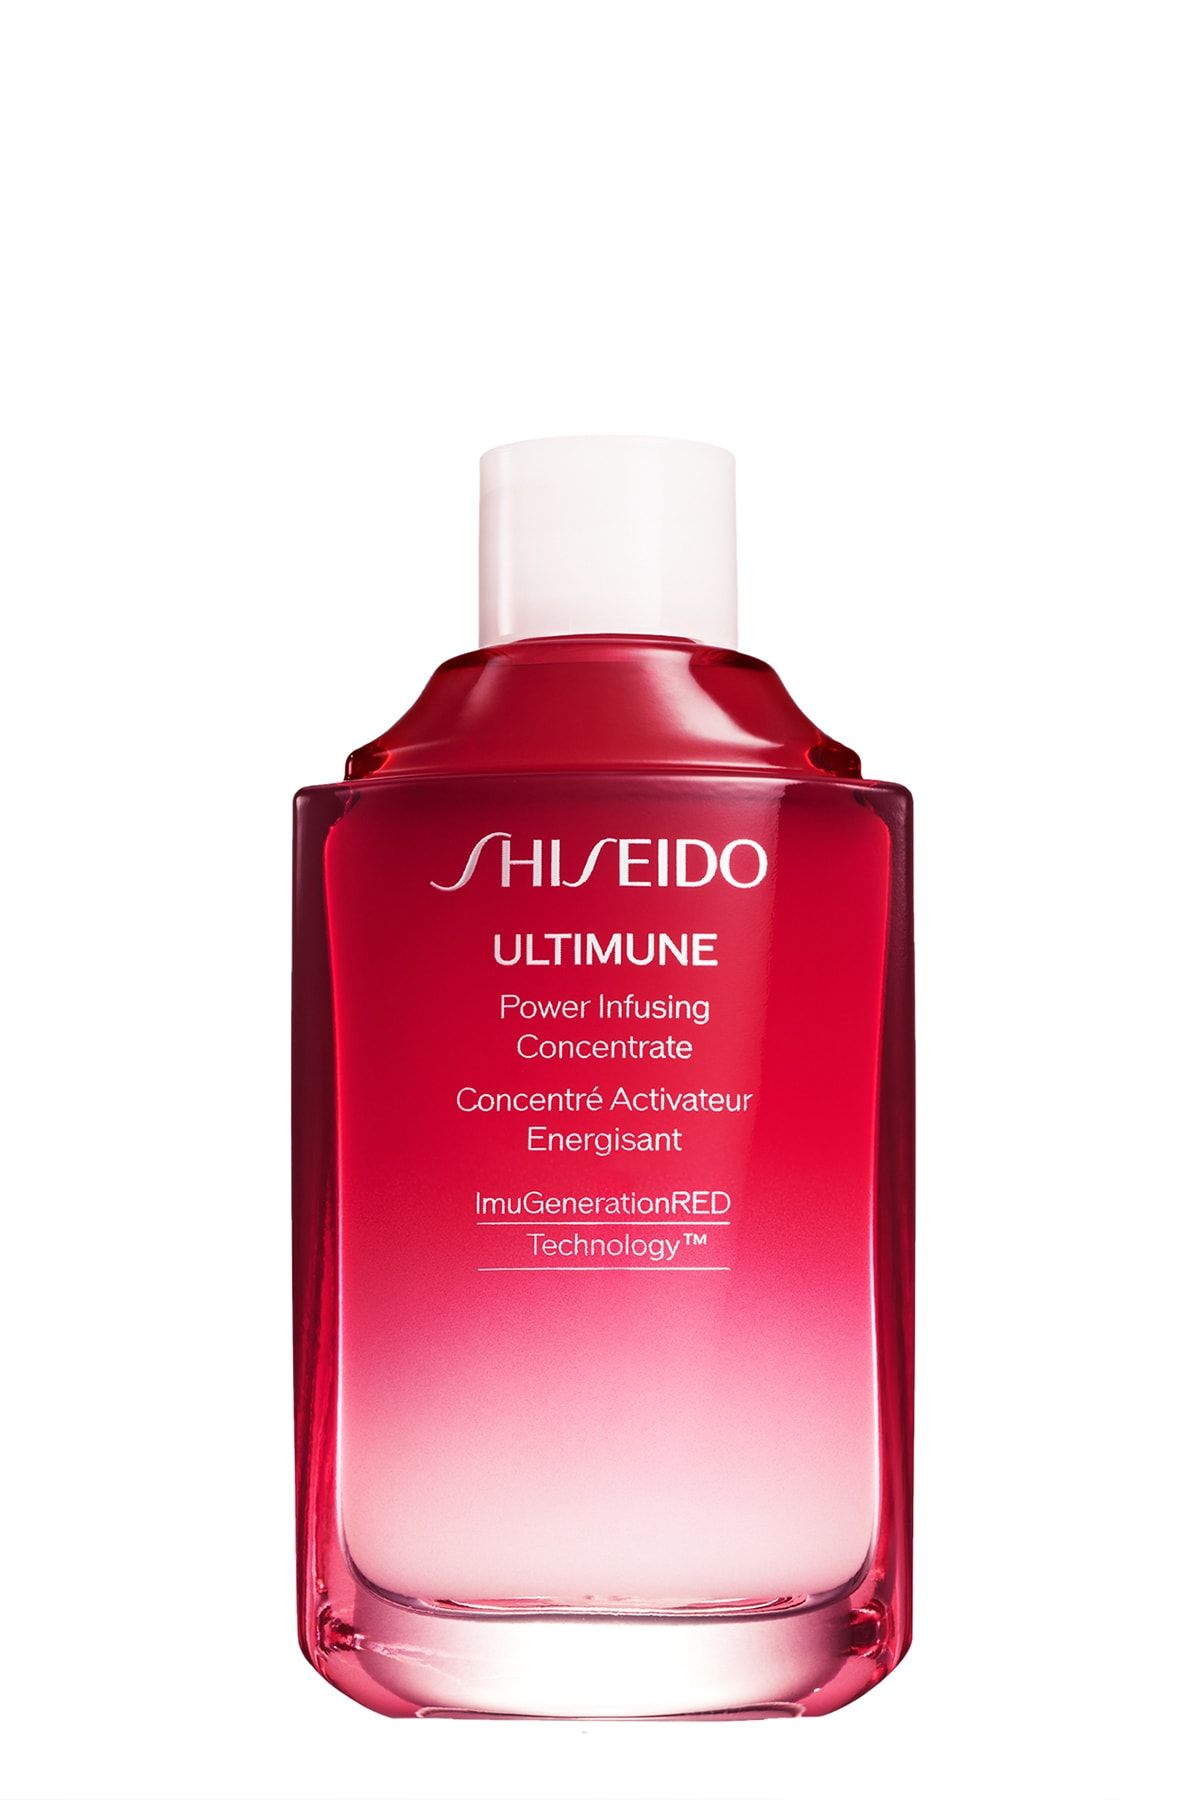 Shiseido Ultimune концентрат. Ultimune концентрат шисейдо Power infusing. Shiseido Ultimune Power infusing Concentrate 3.0 Refill. Shiseido Ultimune концентрат хранение. Shiseido power infusing concentrate